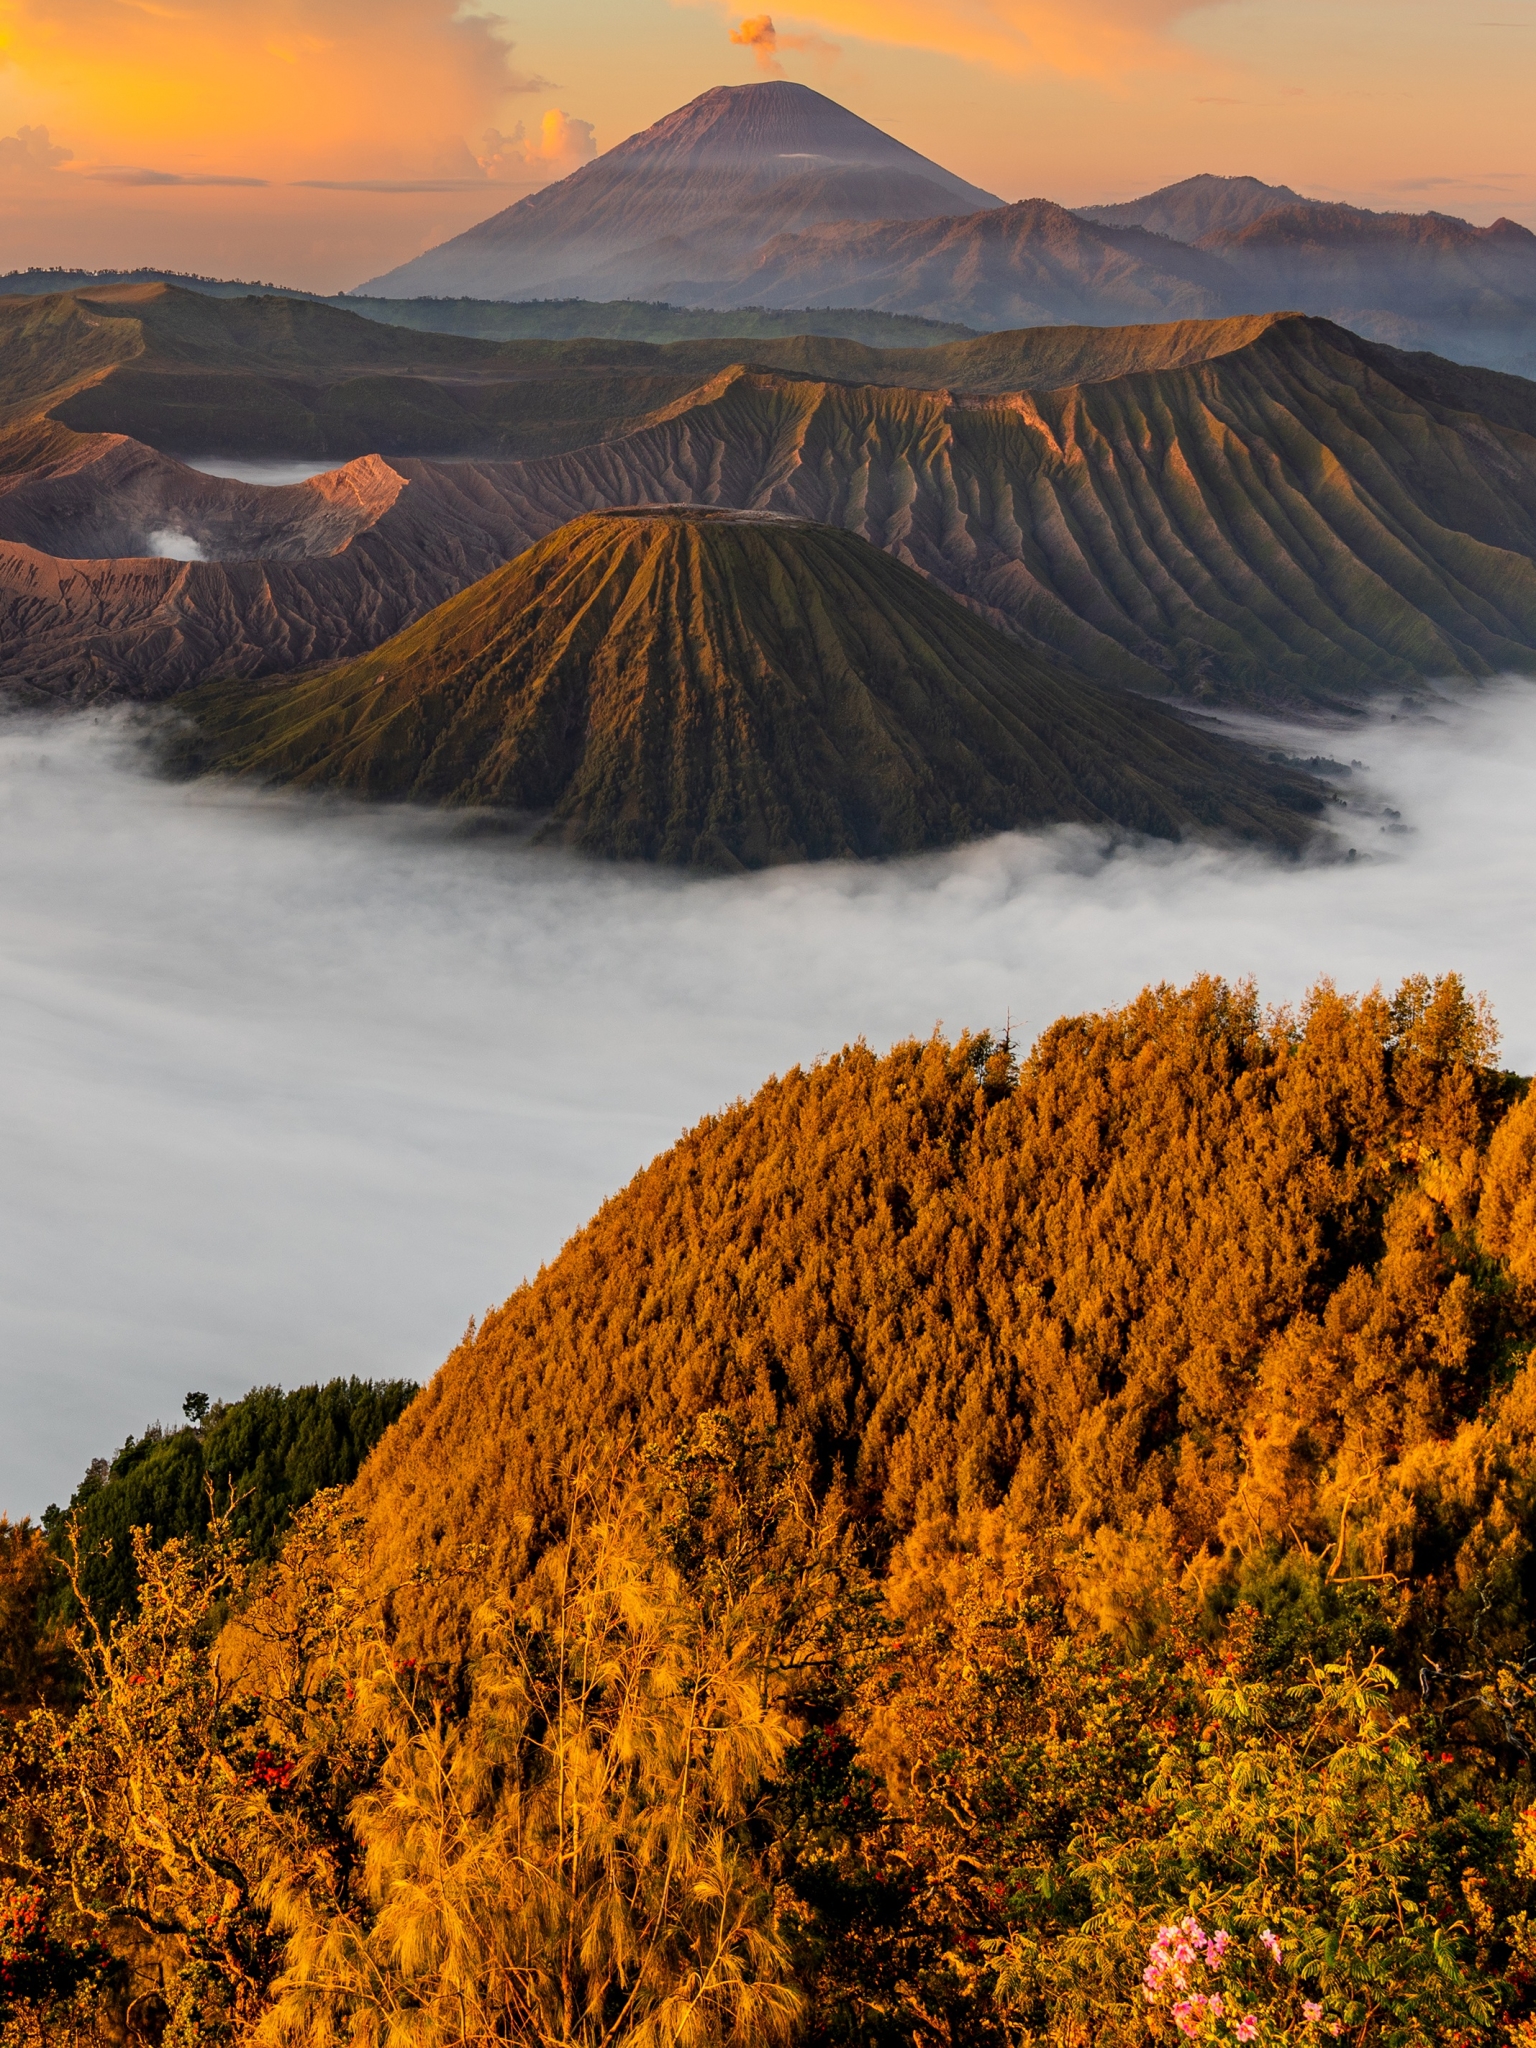 1164666 Bild herunterladen erde/natur, berg bromo, vulkan, indonesien, nebel, berg, gebirge, wolke, landschaft, vulkane - Hintergrundbilder und Bildschirmschoner kostenlos